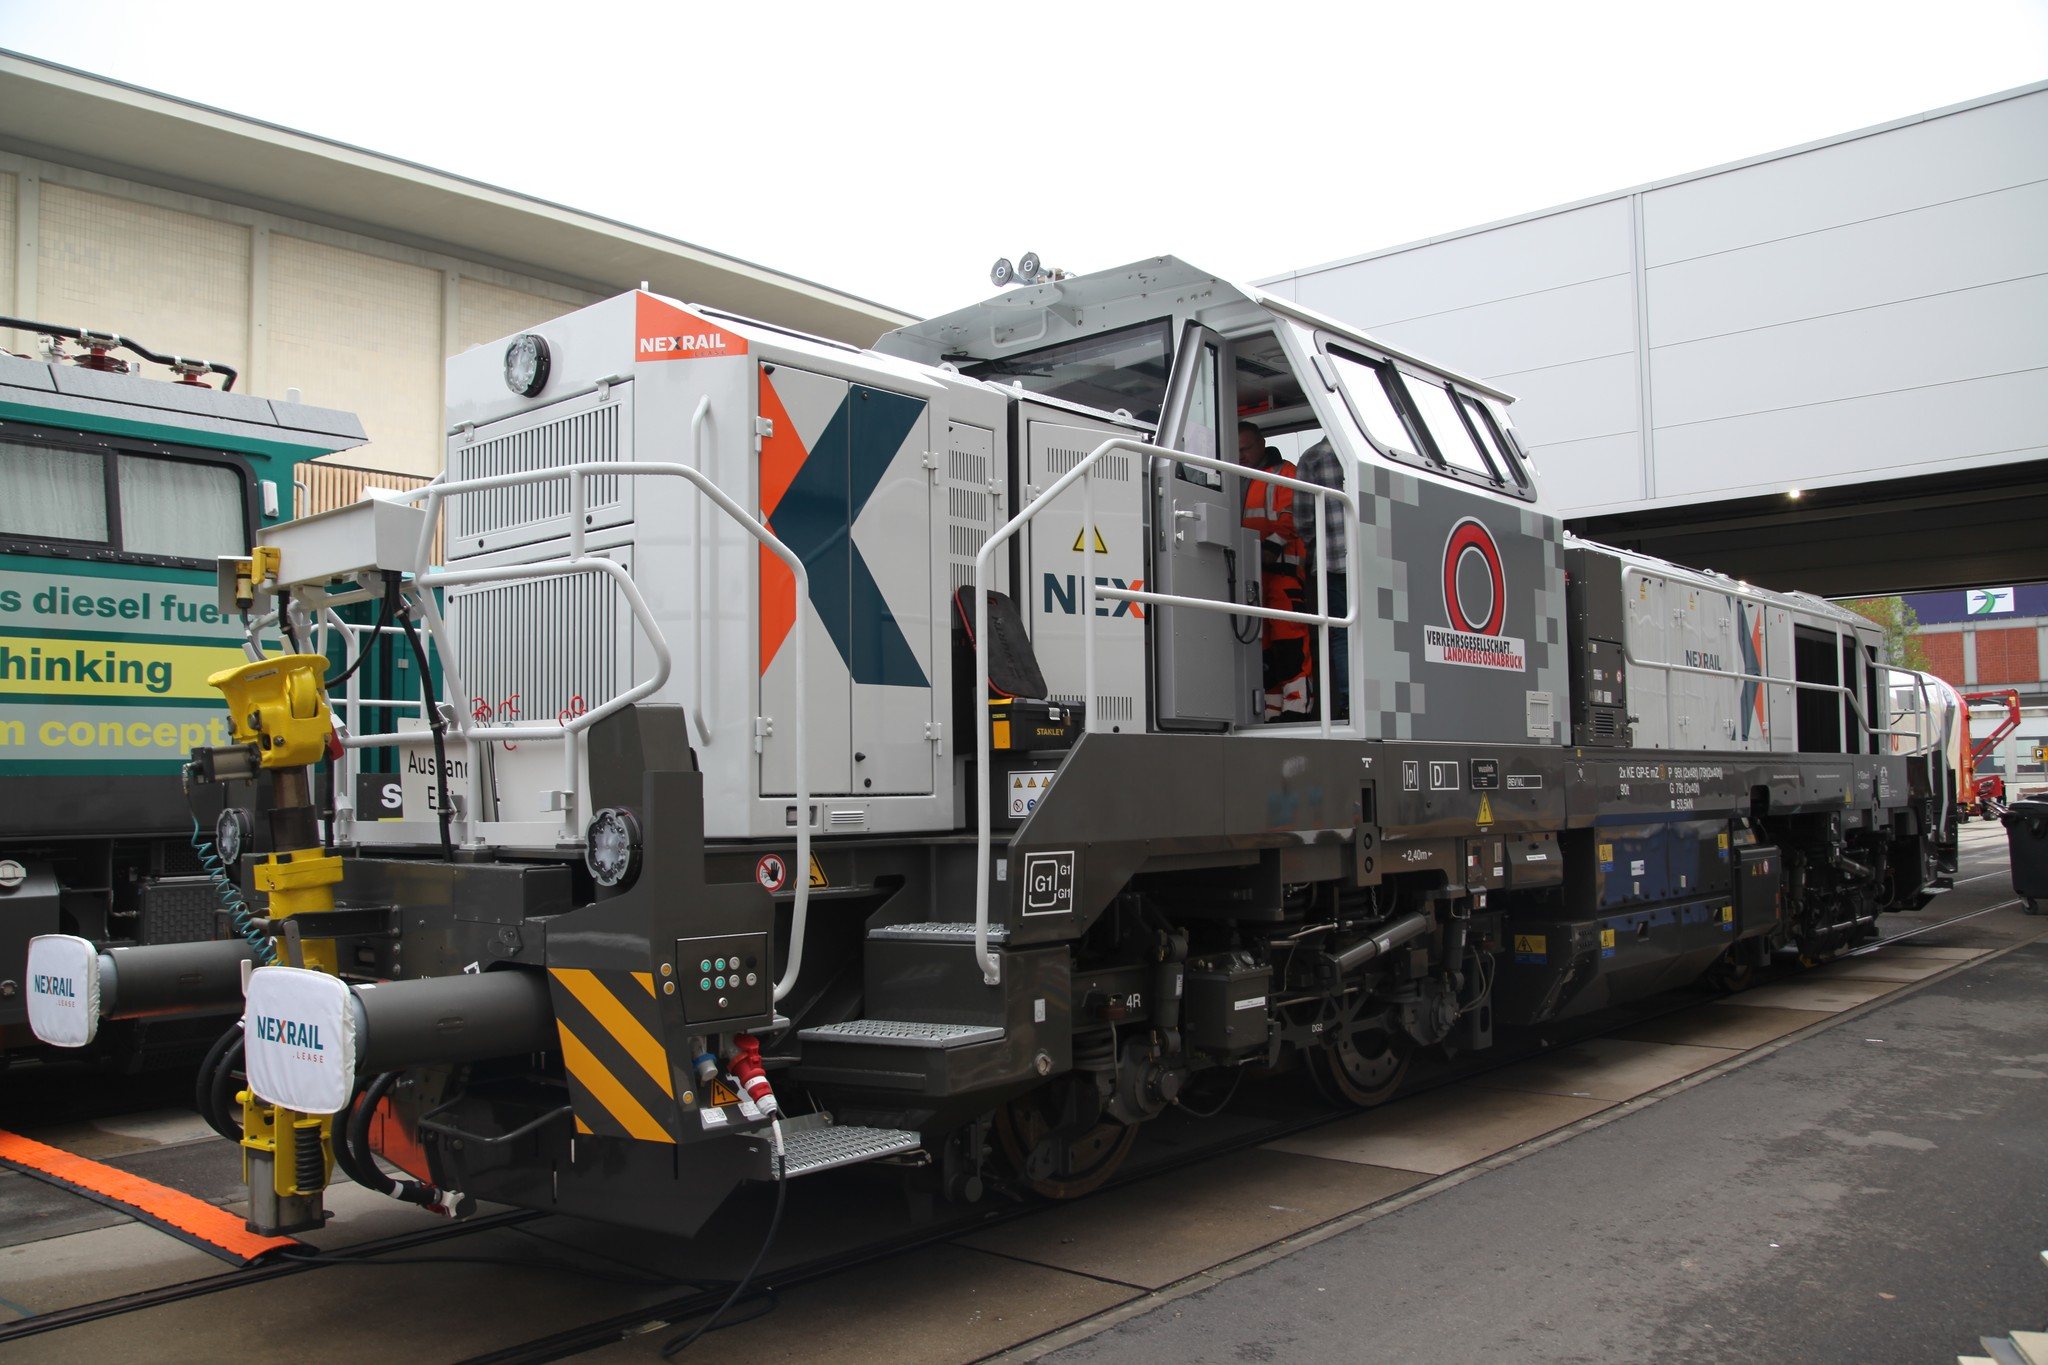 Vossloh DE18 shunting locomotive